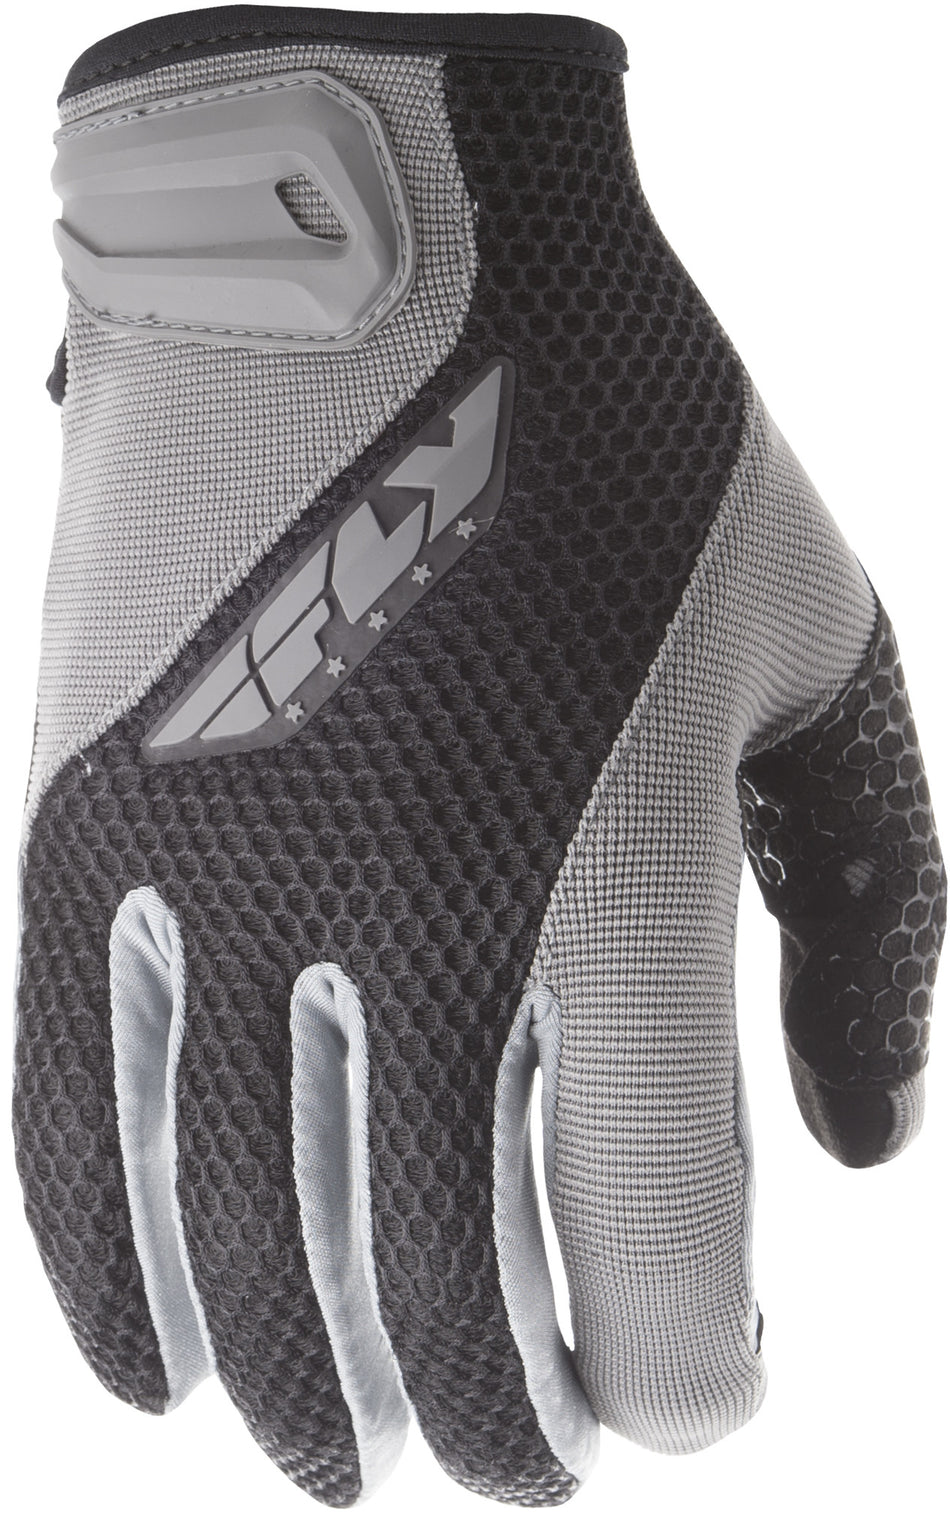 FLY RACING Coolpro Gloves Gunmetal/Black 3x #5884 476-4023~7